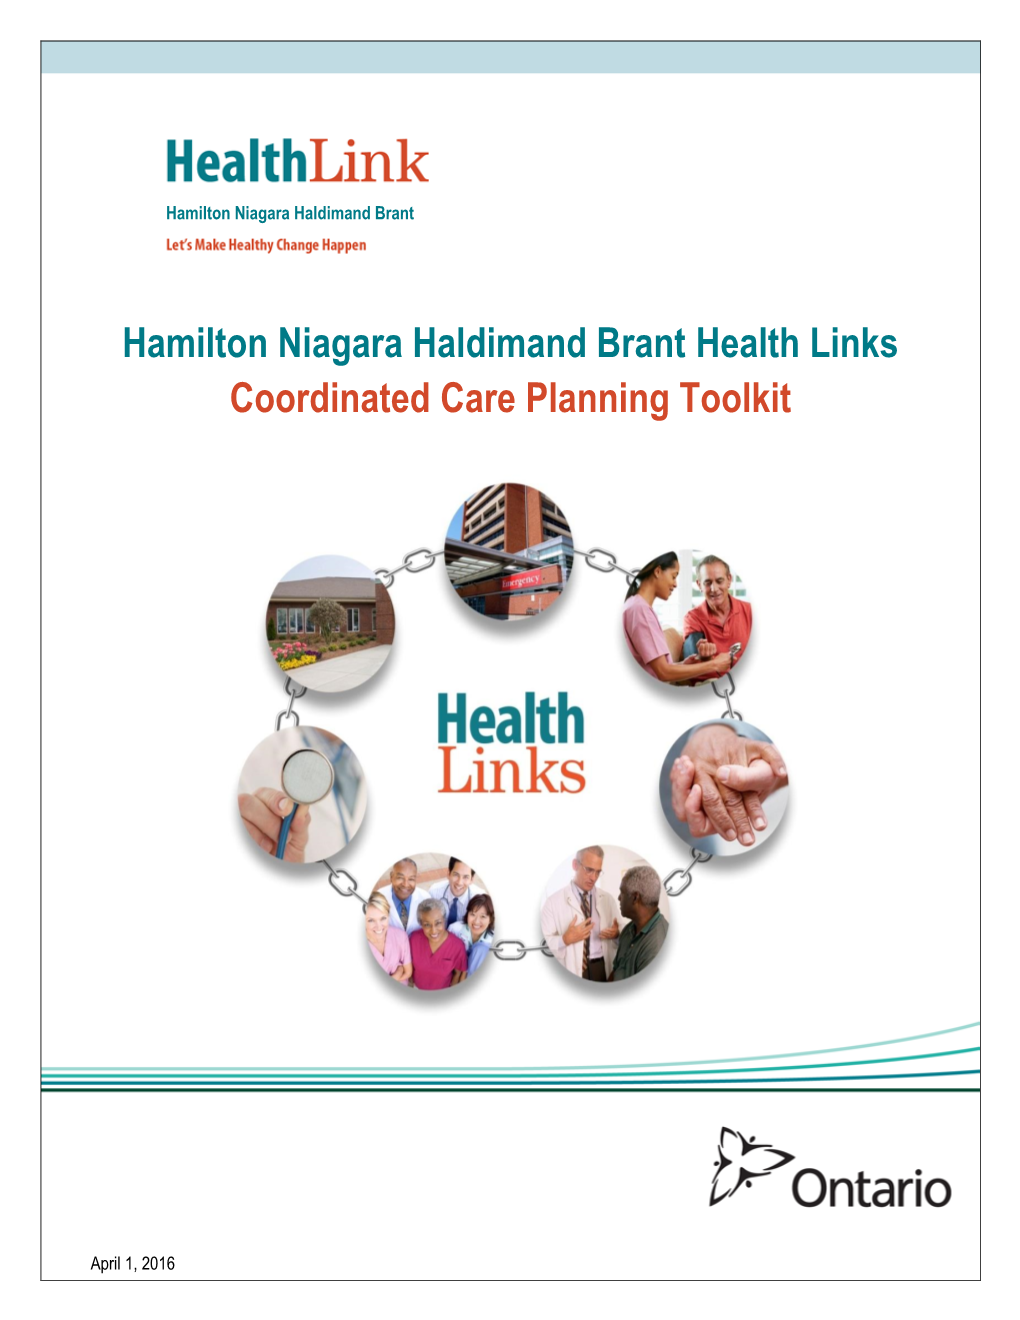 Hamilton Niagara Haldimand Brant Health Links Coordinated Care Planning Toolkit